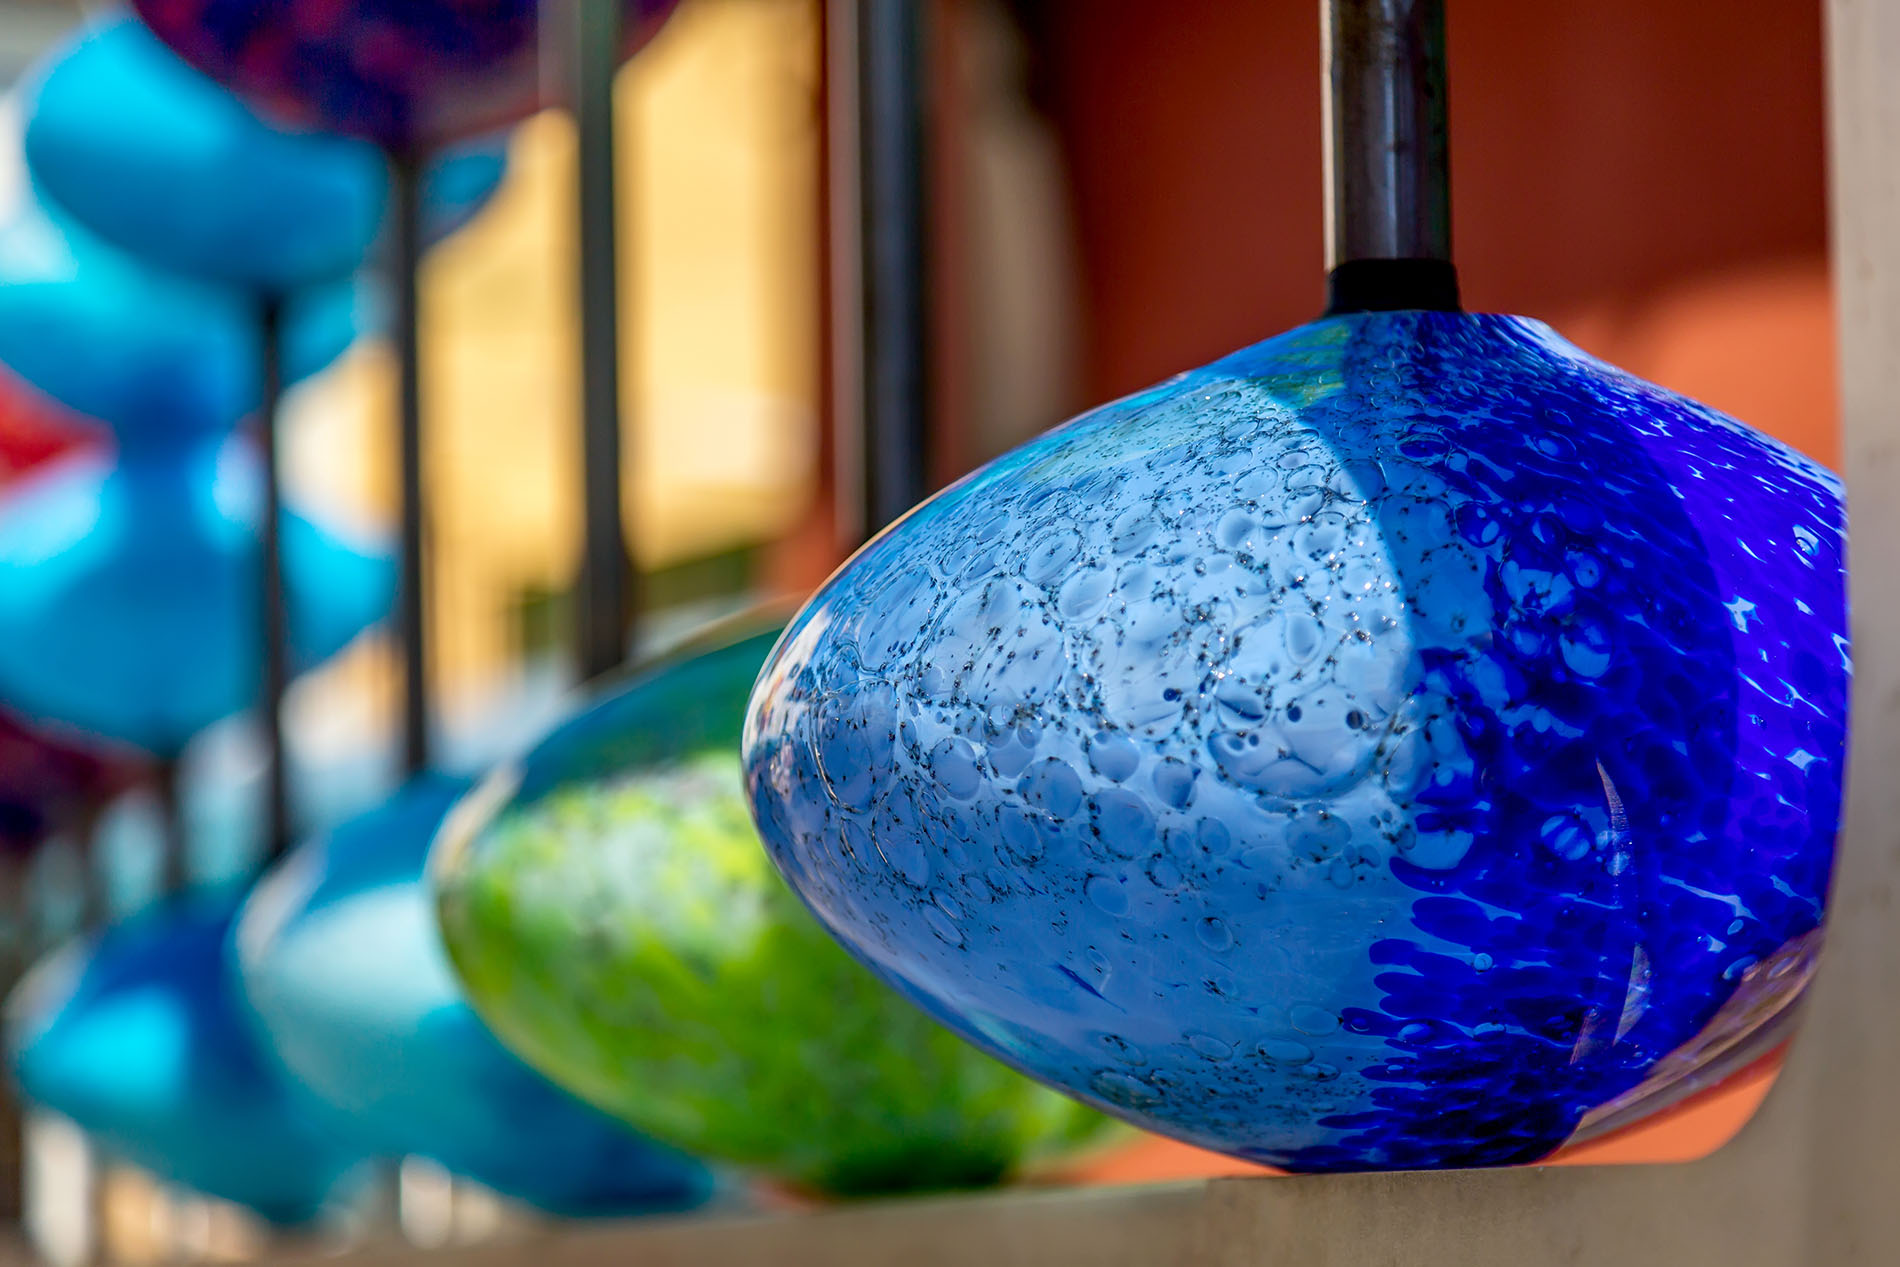 Glass blowing art in Murano